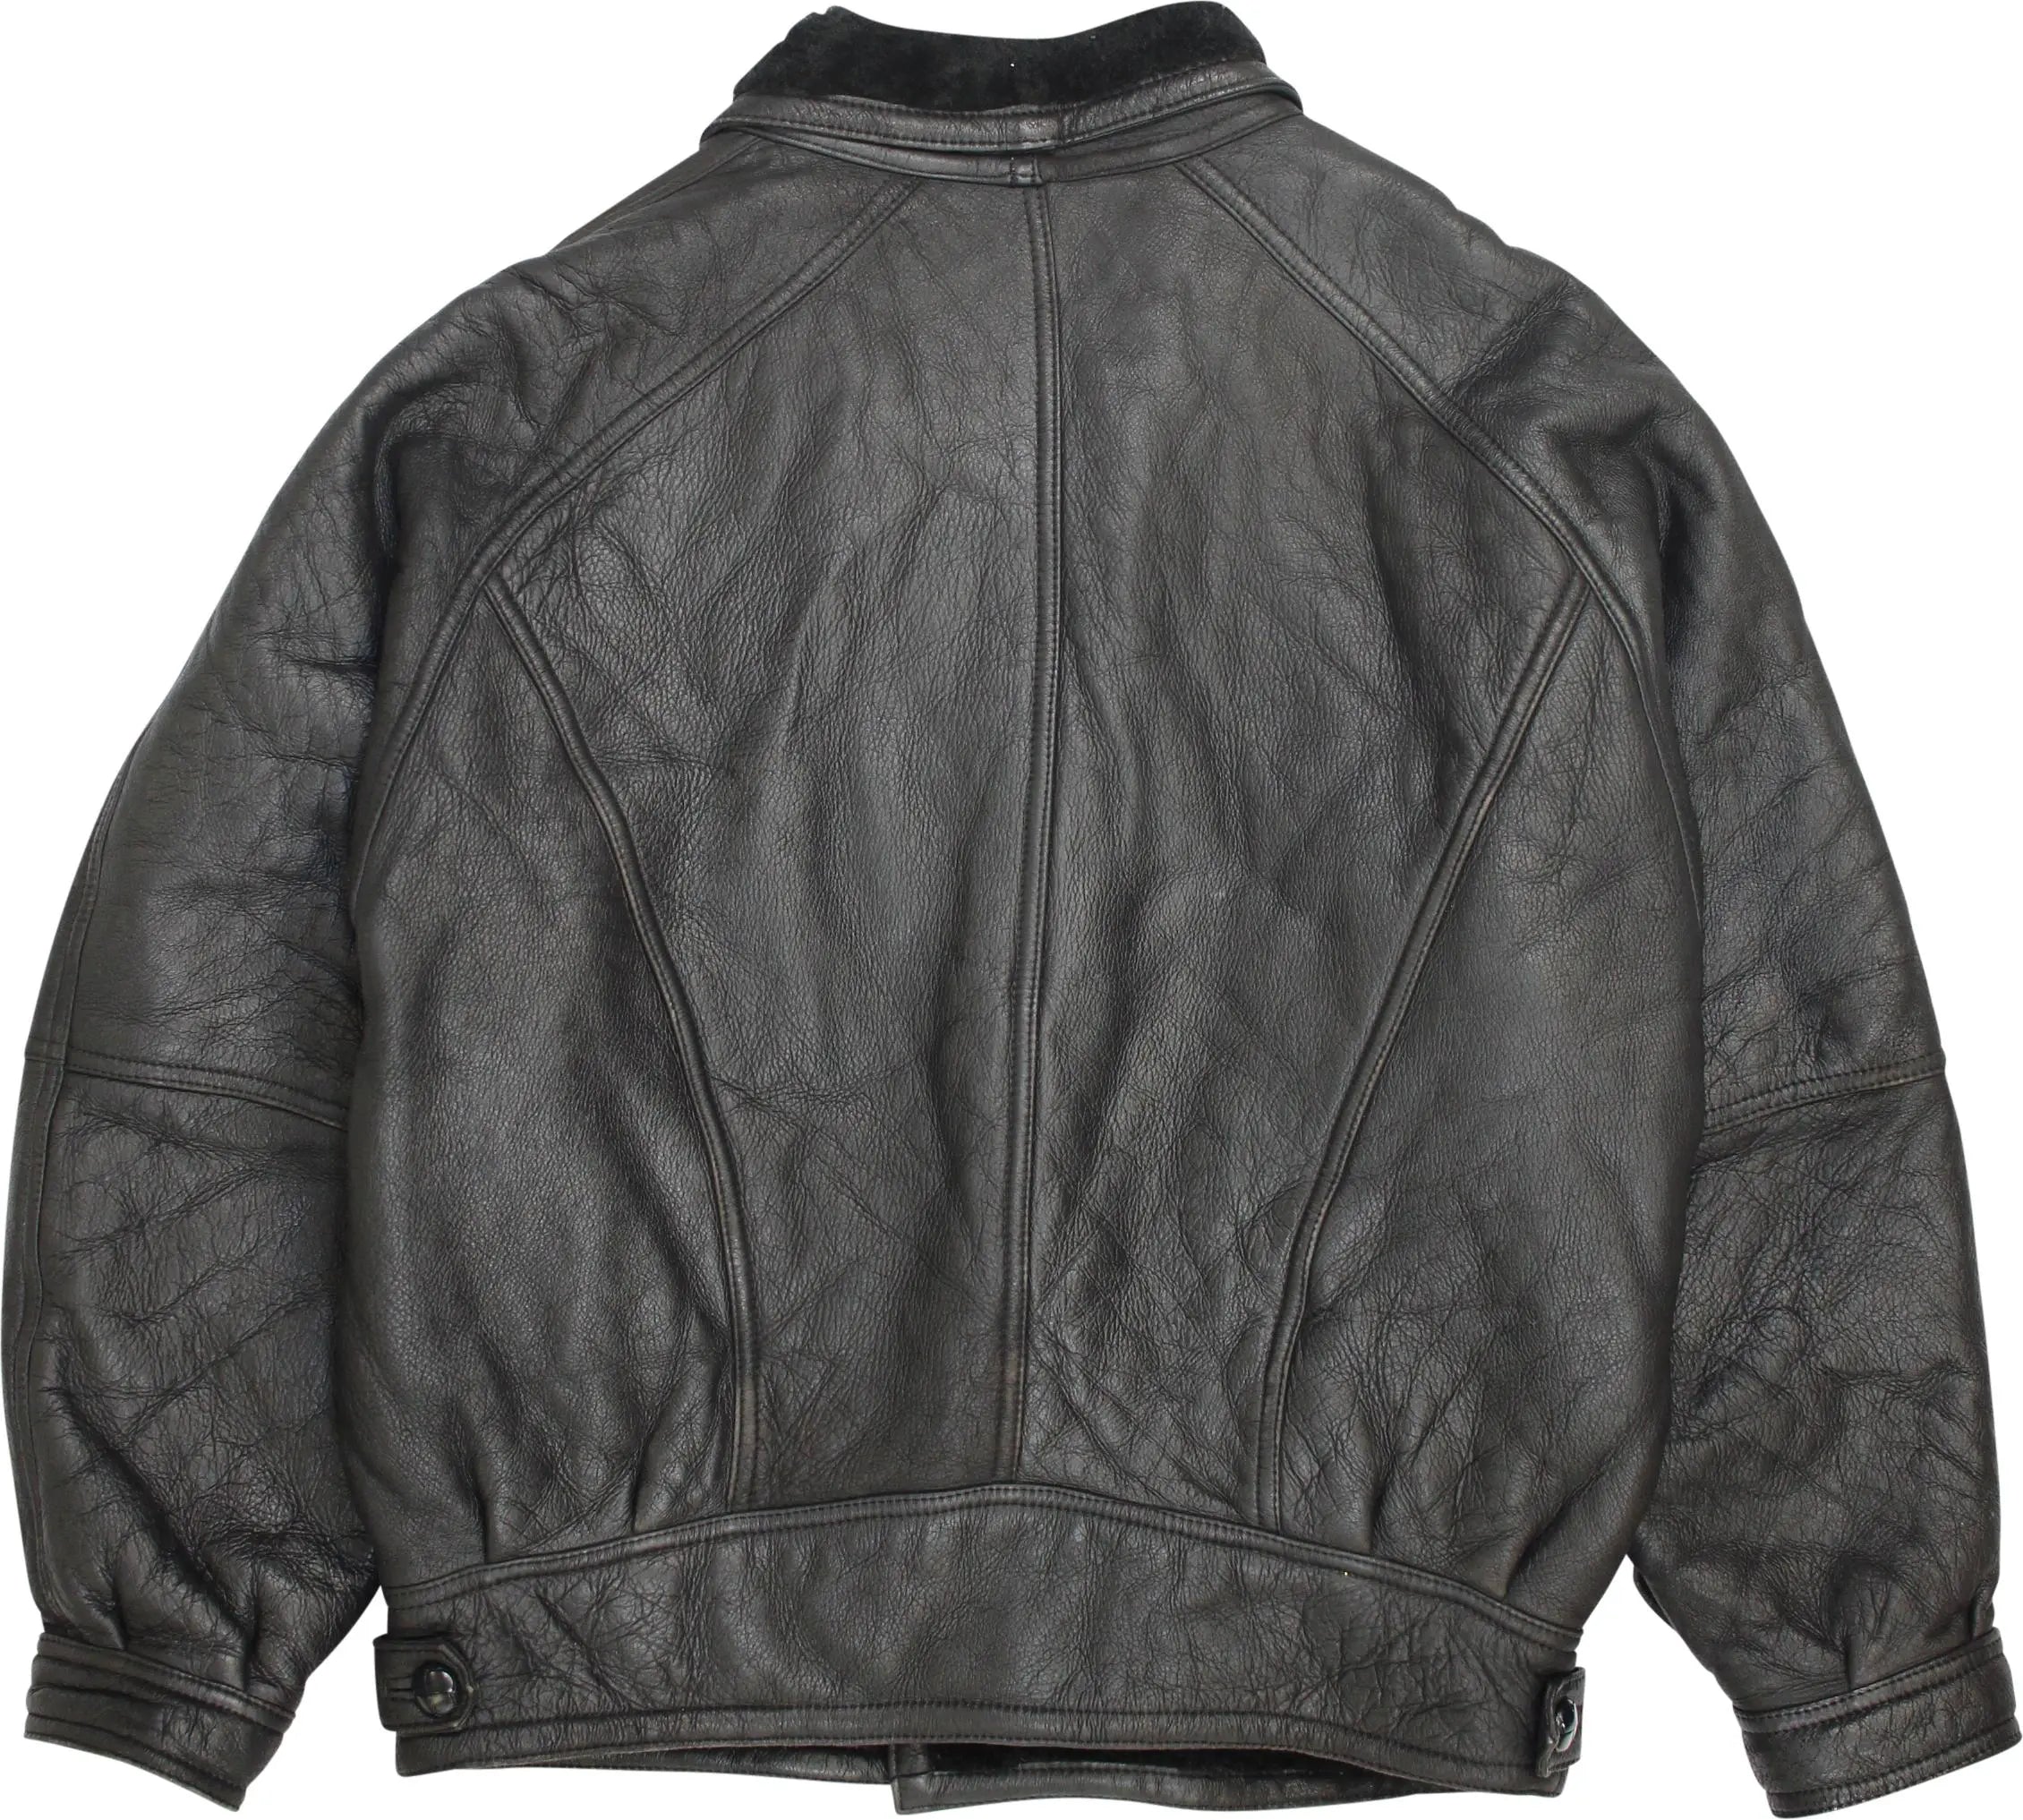 Conbipel - Black Leather Jacket- ThriftTale.com - Vintage and second handclothing